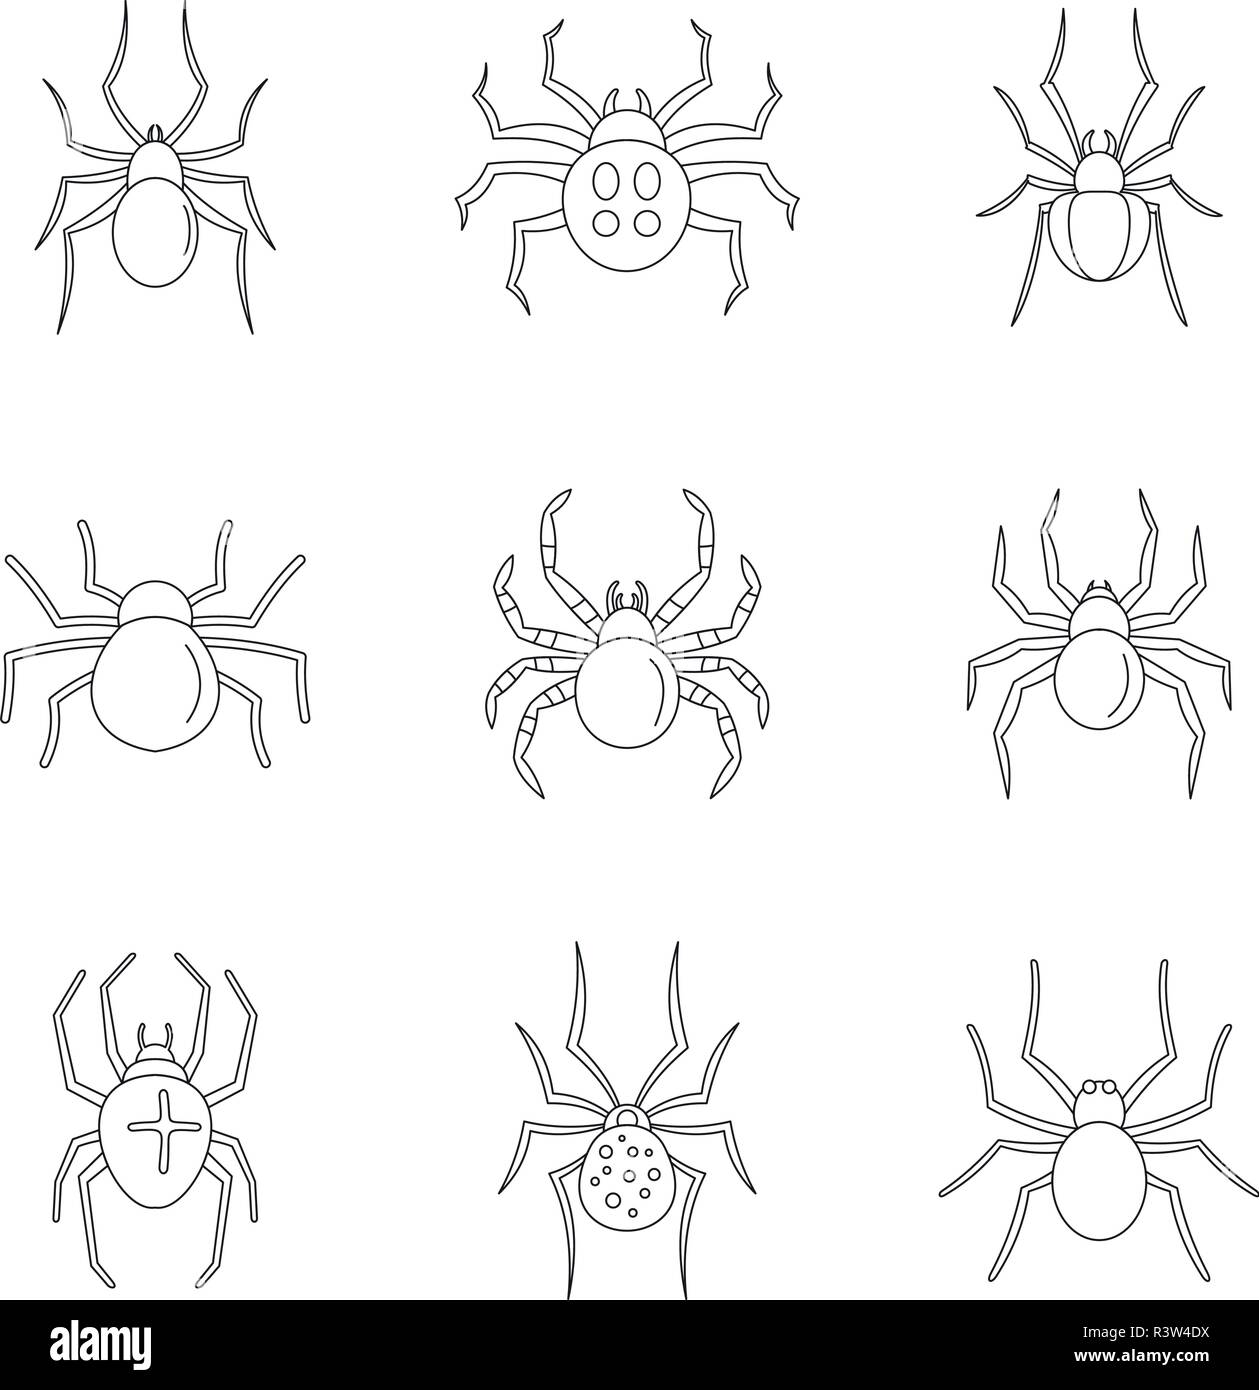 Spider-bug Caterpillar Phobie Symbole gesetzt. Überblick Abbildung: 9 Spider-bug Caterpillar Phobie Vector Icons für Web Stock Vektor